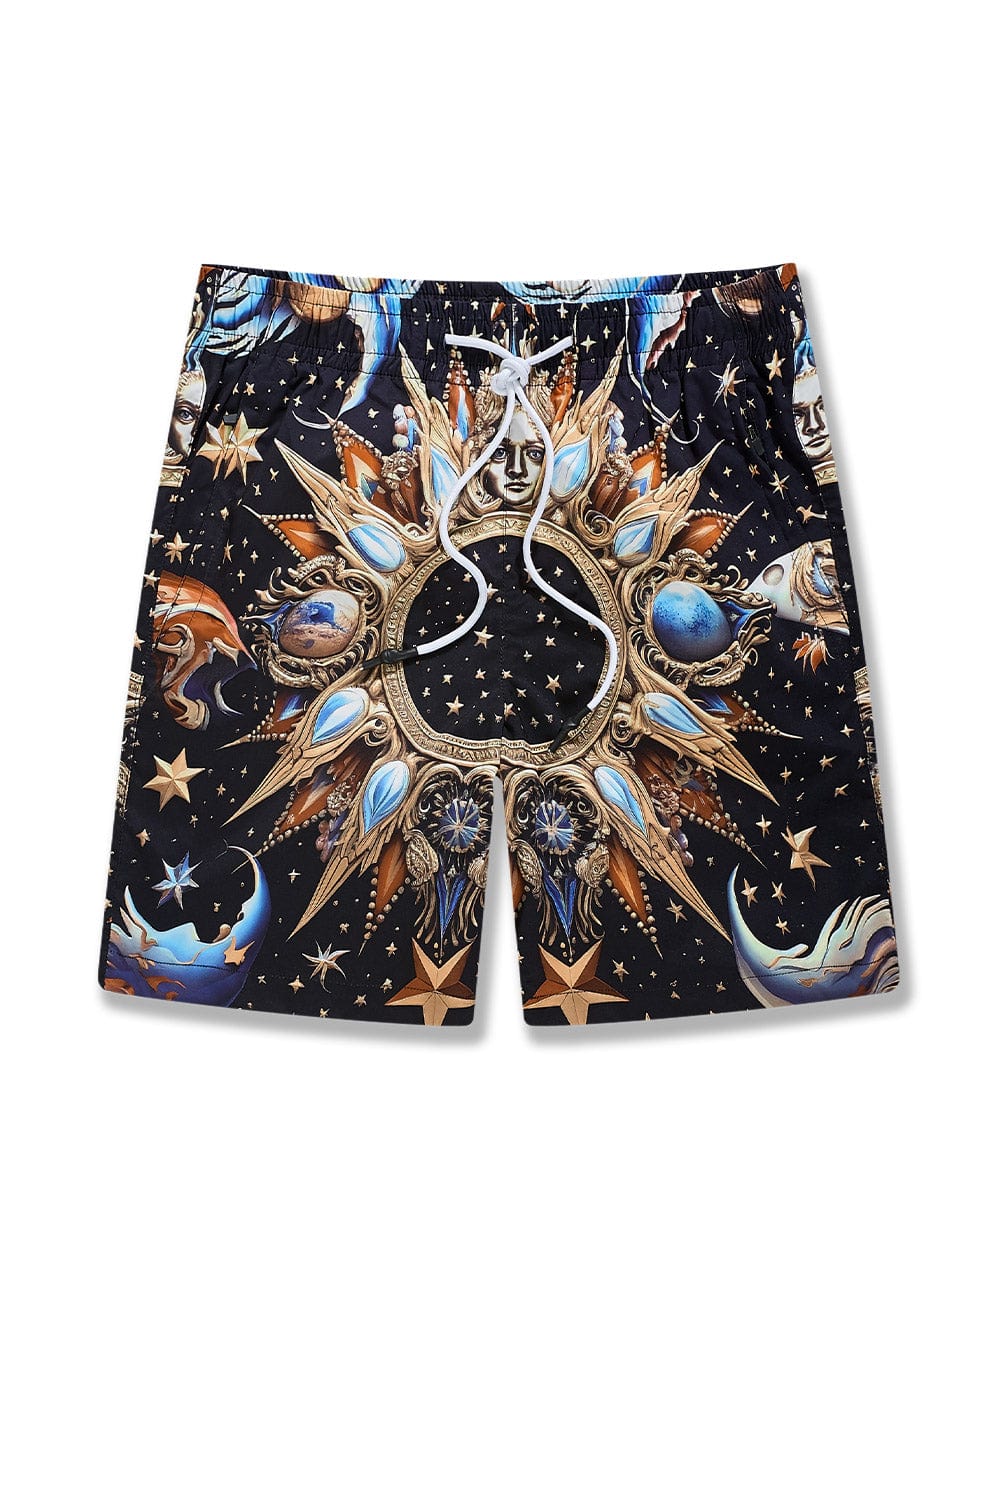 Jordan Craig Retro - Ibiza Lounge Shorts (Celestial) Celestial / S